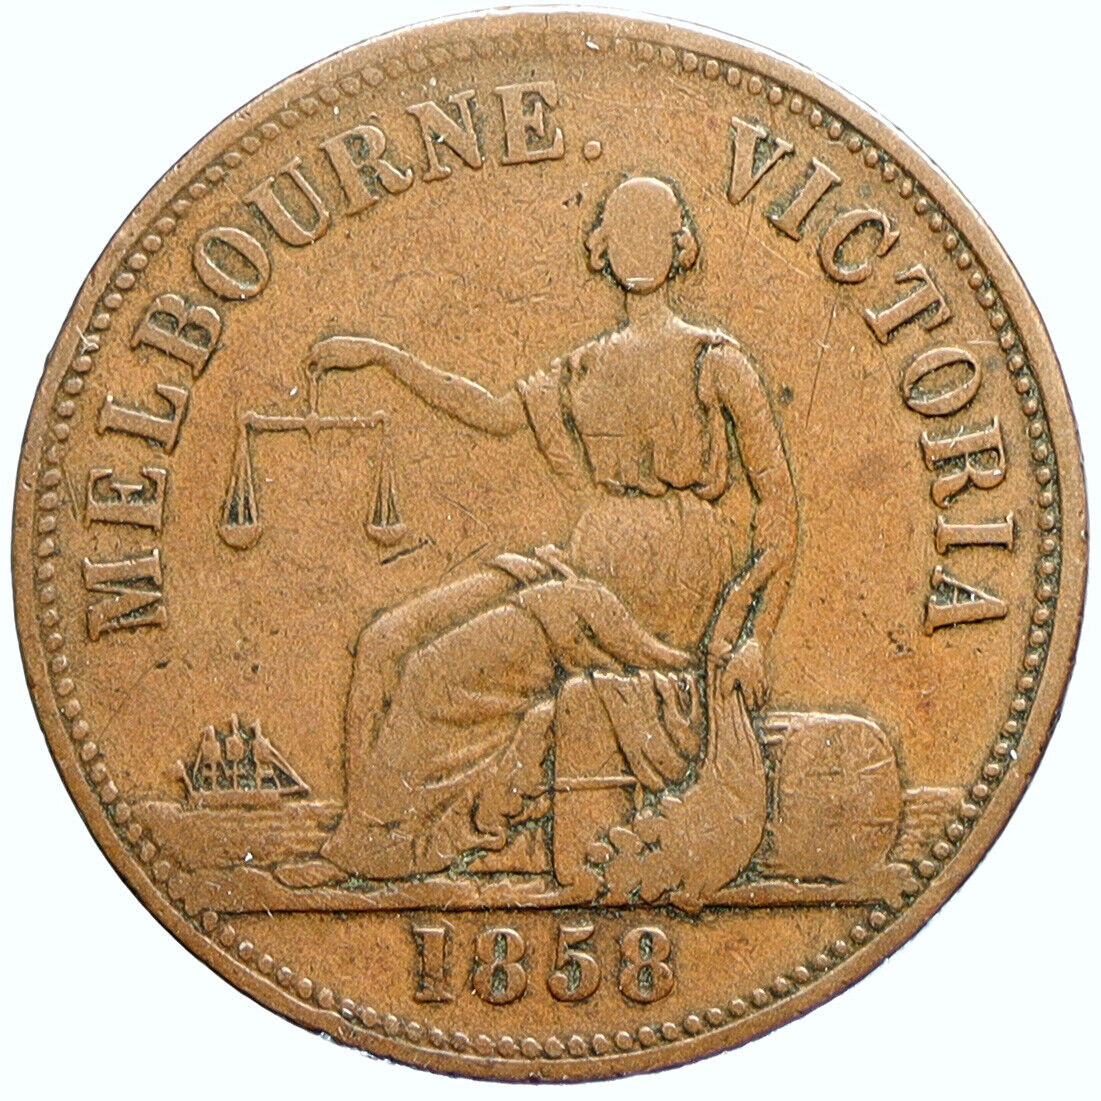 1858 AUSTRALIA Melbourne Victoria HIDE DE CARLE GROCER Penny Trade Token i113336